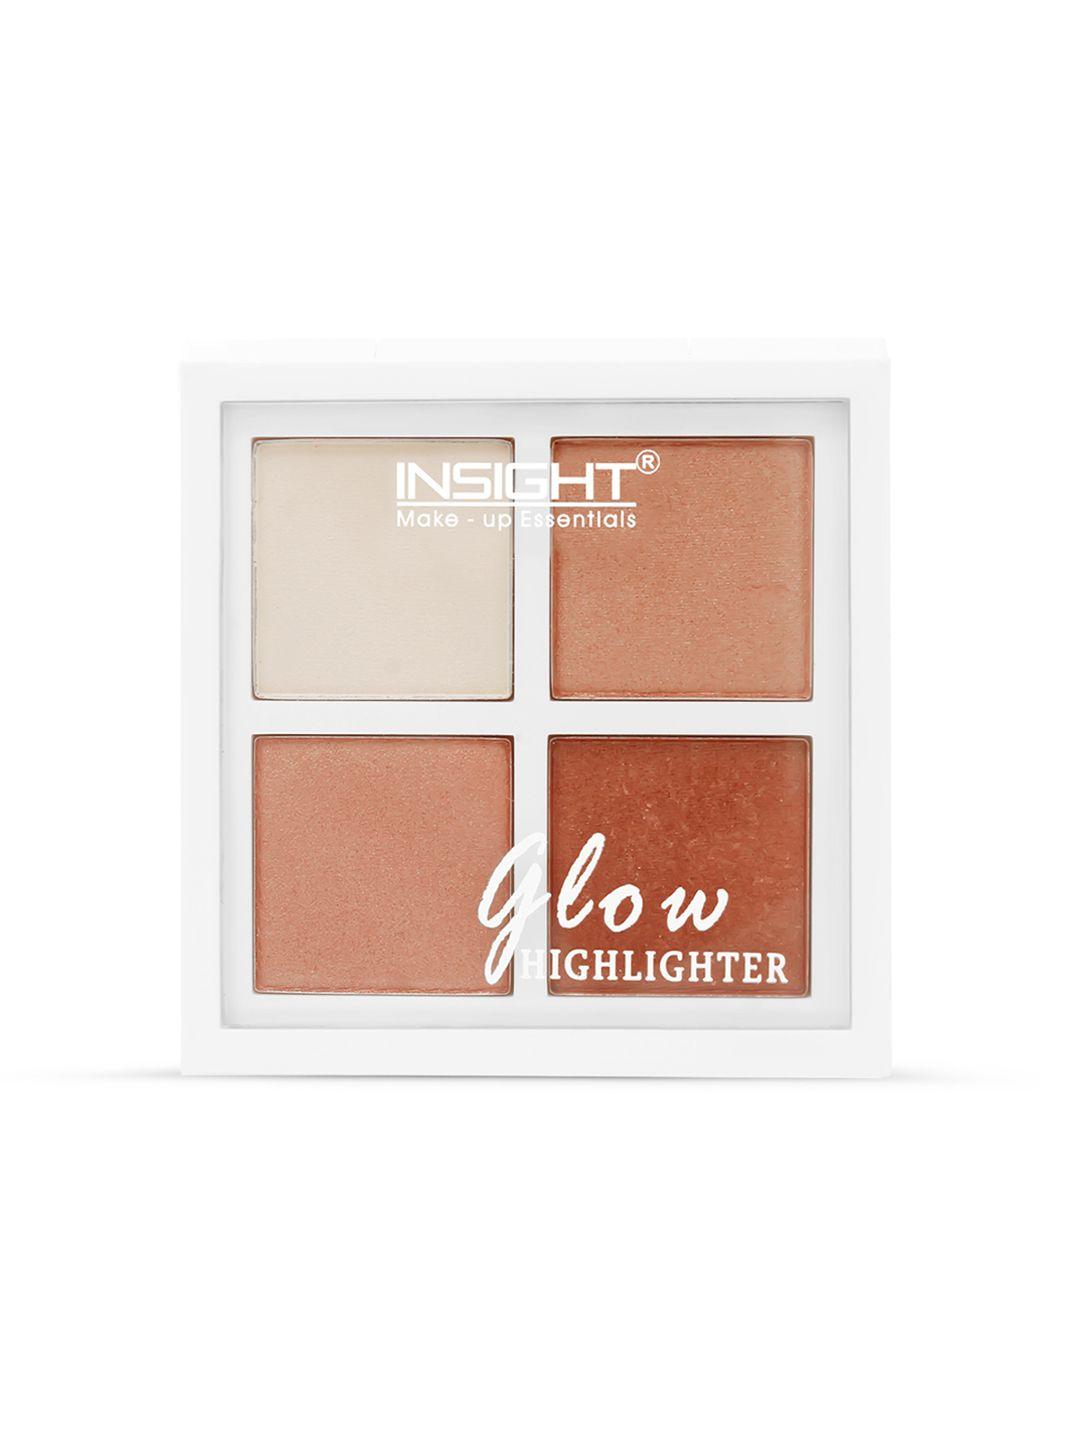 insight cosmetics lightweight glow highlighter 15 g - shade b